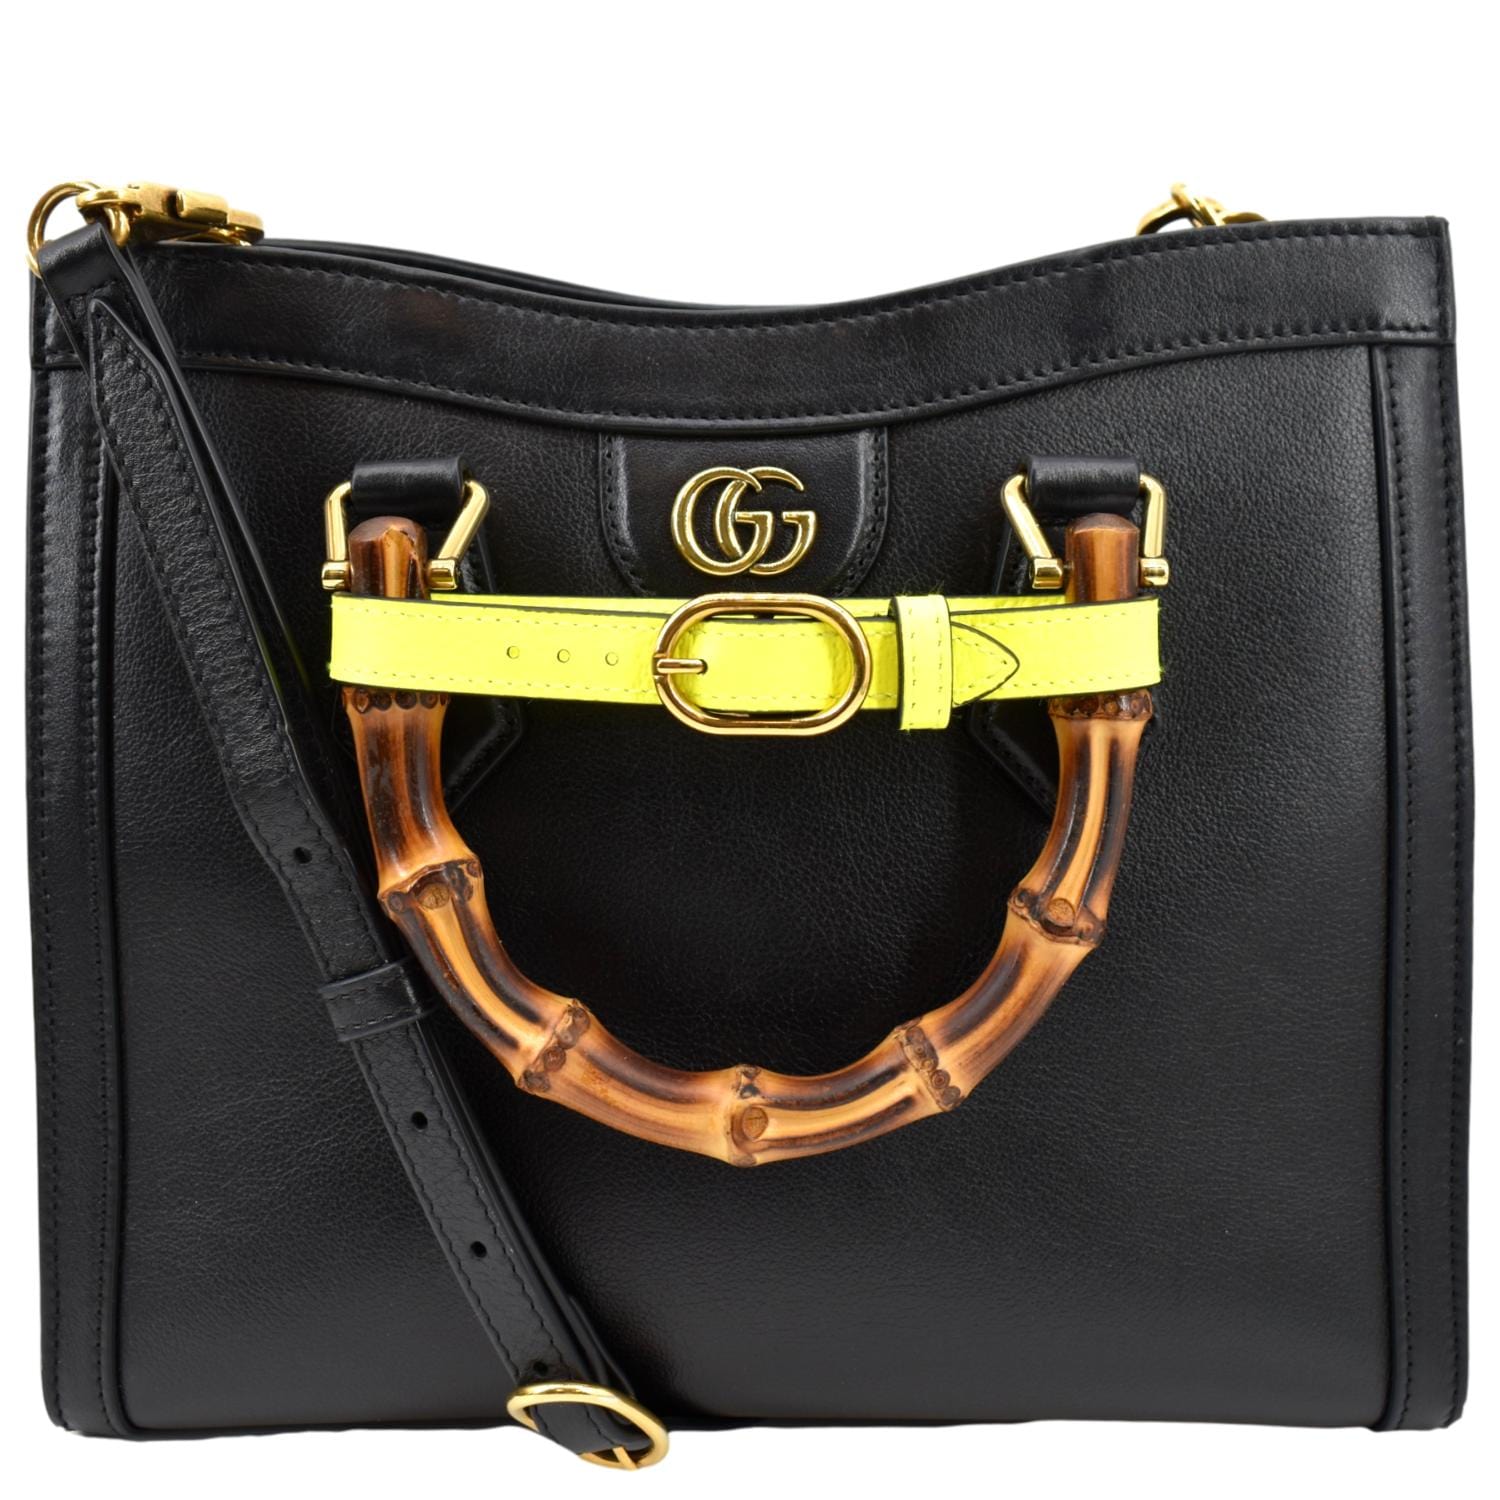 Gucci Diana medium tote bag in black leather